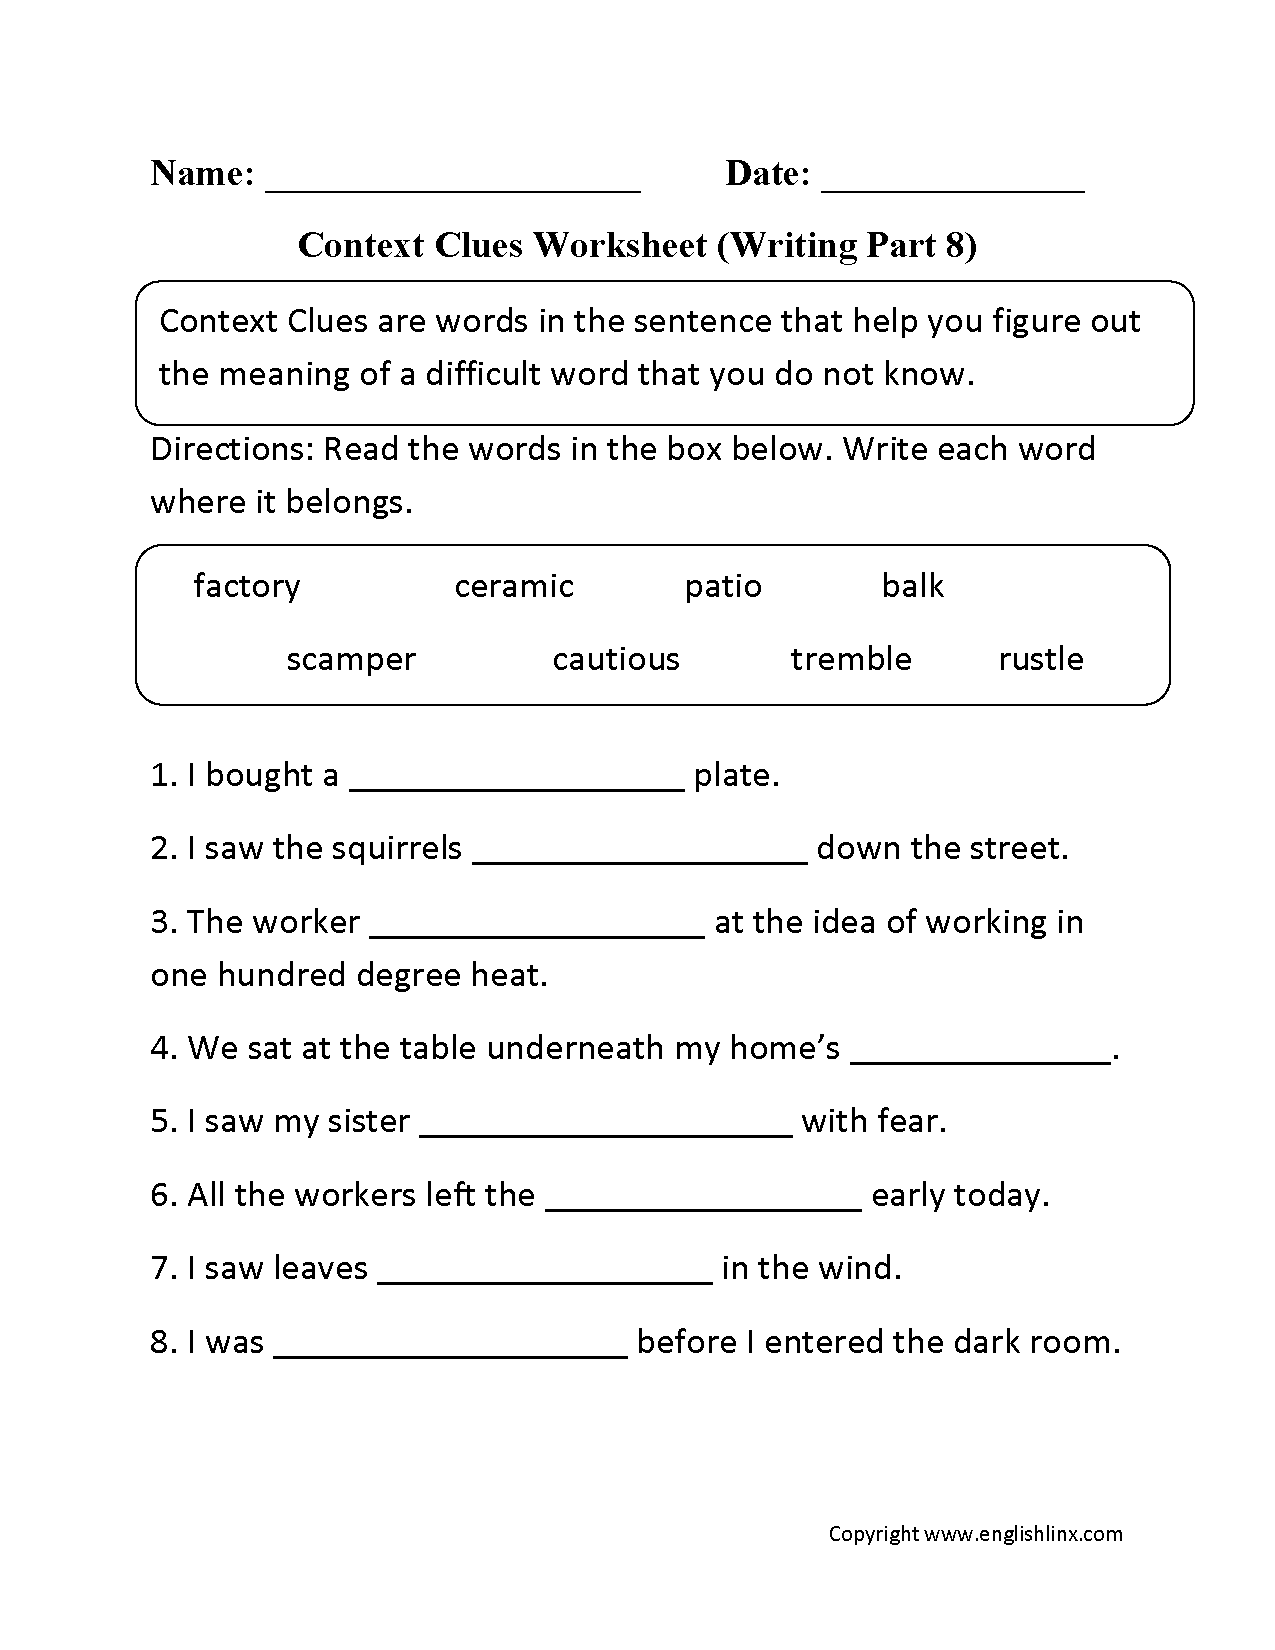 context-clues-worksheets-context-clues-worksheet-writing-part-8